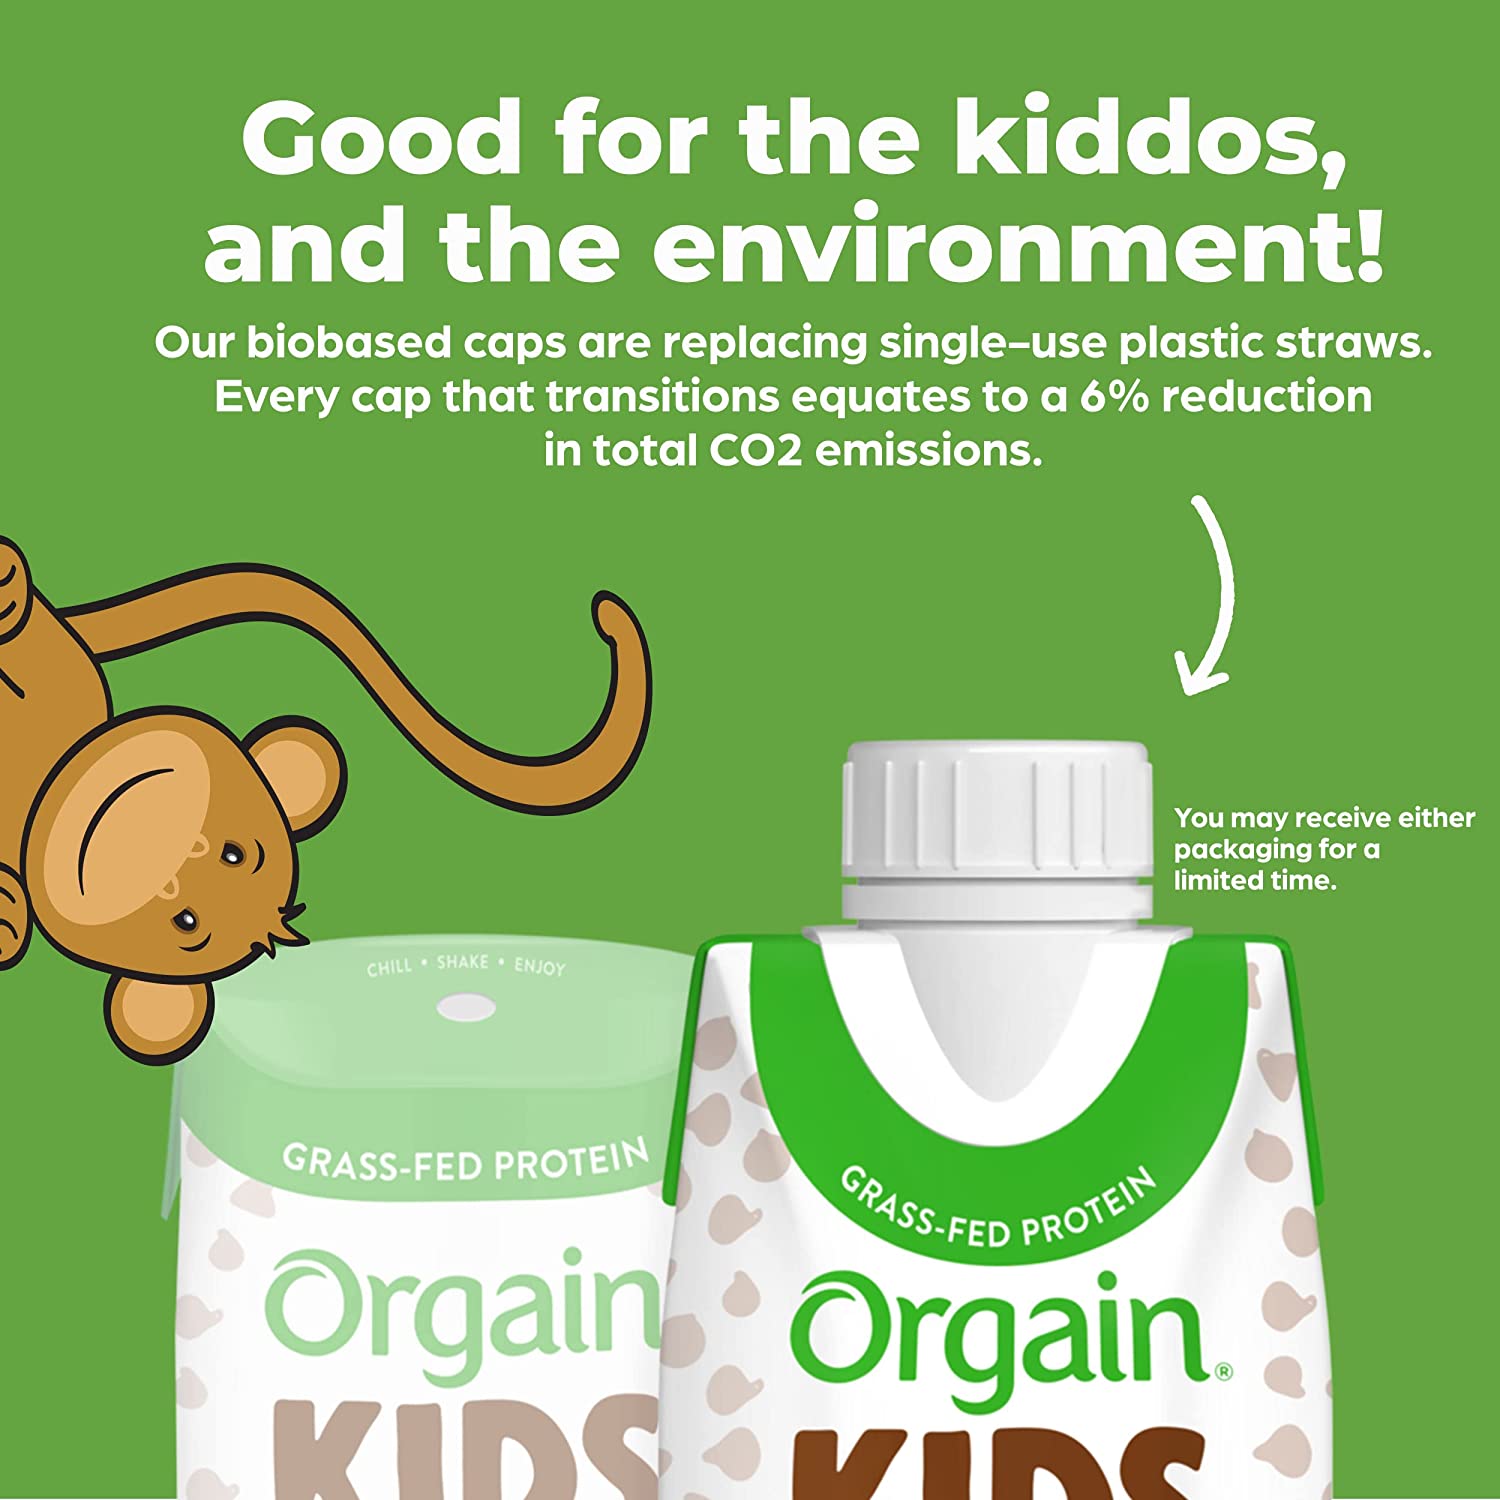 Orgain Kids Plant Protein Nutritional Shake, Organic, Vanilla Flavor, 12 Pack - 12 pack, 8 fl oz cartons